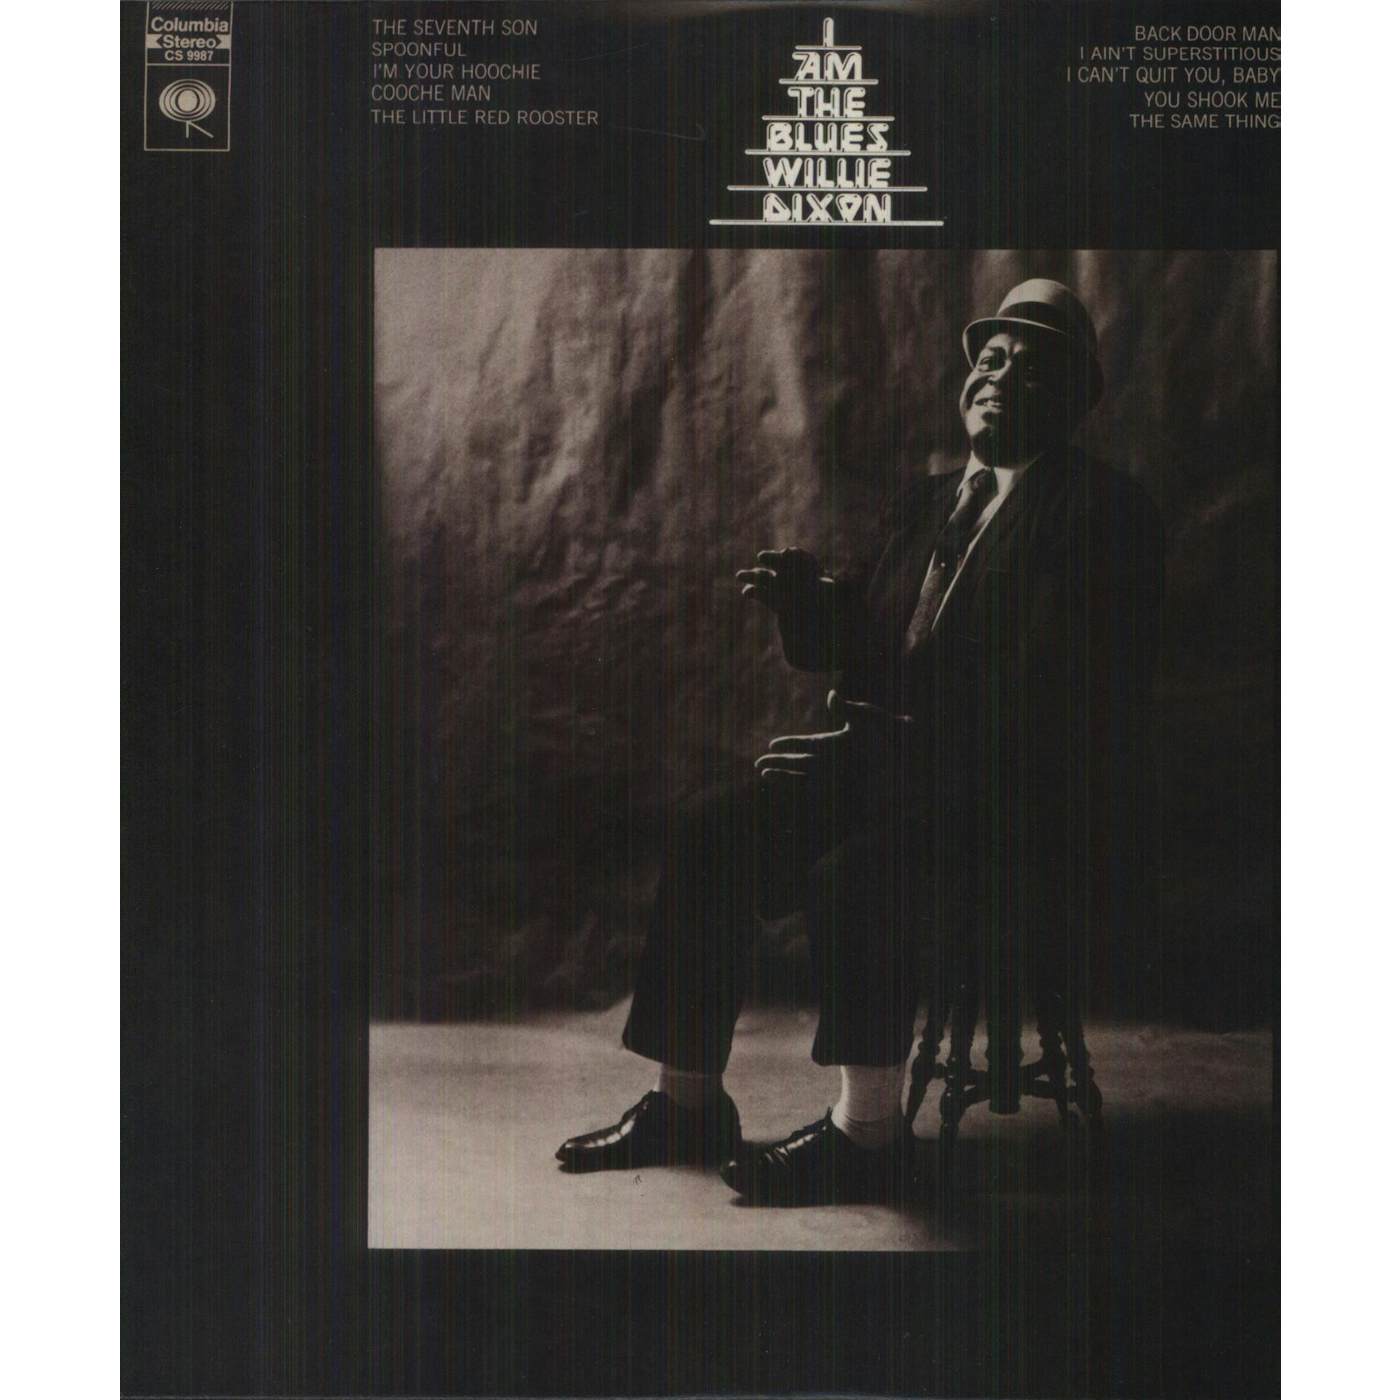 Willie Dixon AM THE BLUES Vinyl Record